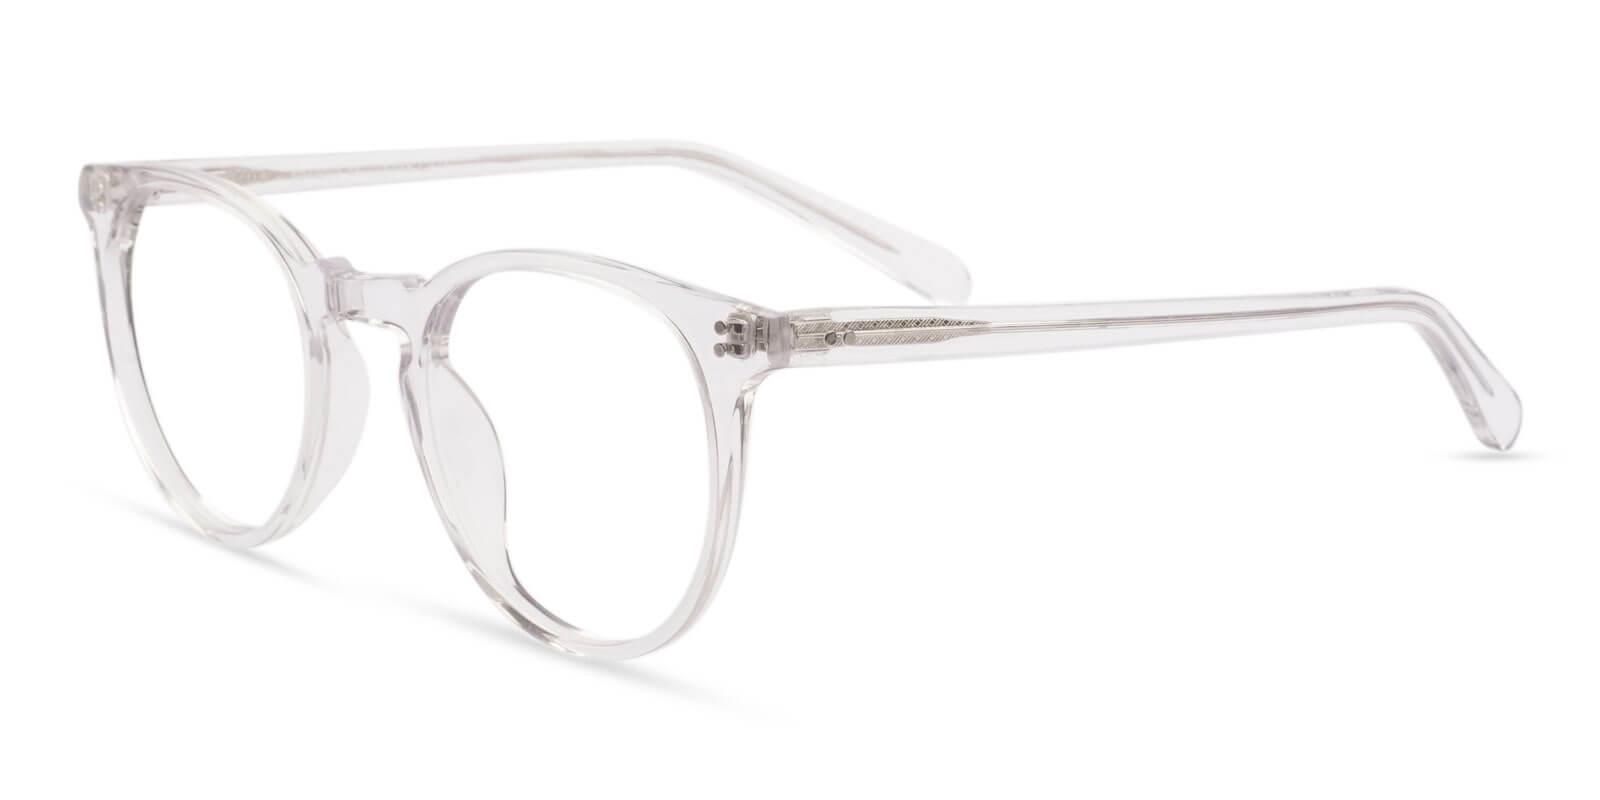 Mercury Translucent Acetate Eyeglasses , UniversalBridgeFit Frames from ABBE Glasses